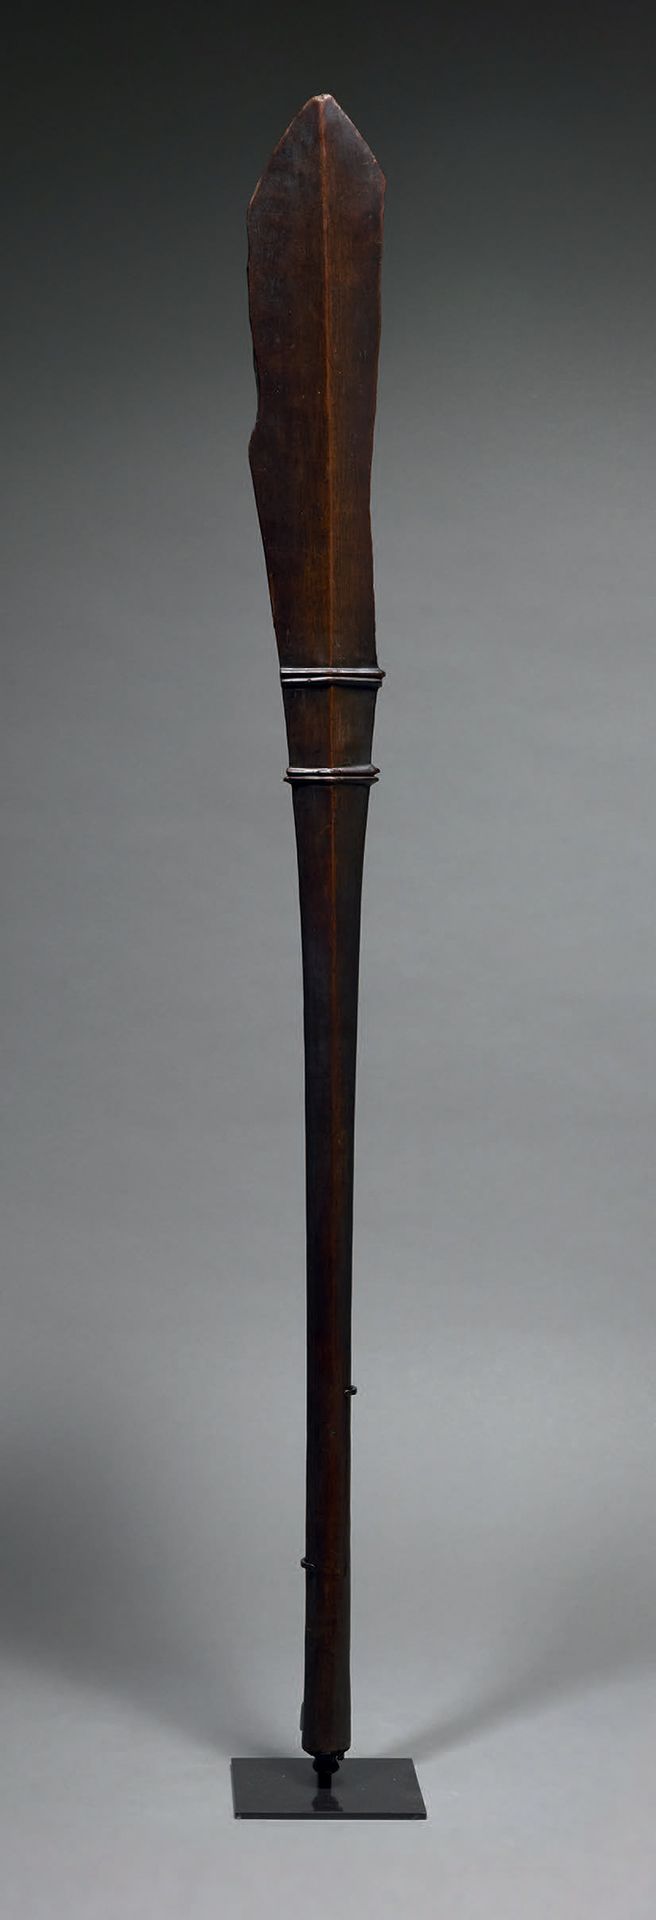 Null 
阿考塔或帕基帕基俱乐部

汤加

木头

L. 125 cm



出处 :

- 约翰-托马斯牧师（1797-1881）在1826年至1859年间&hellip;